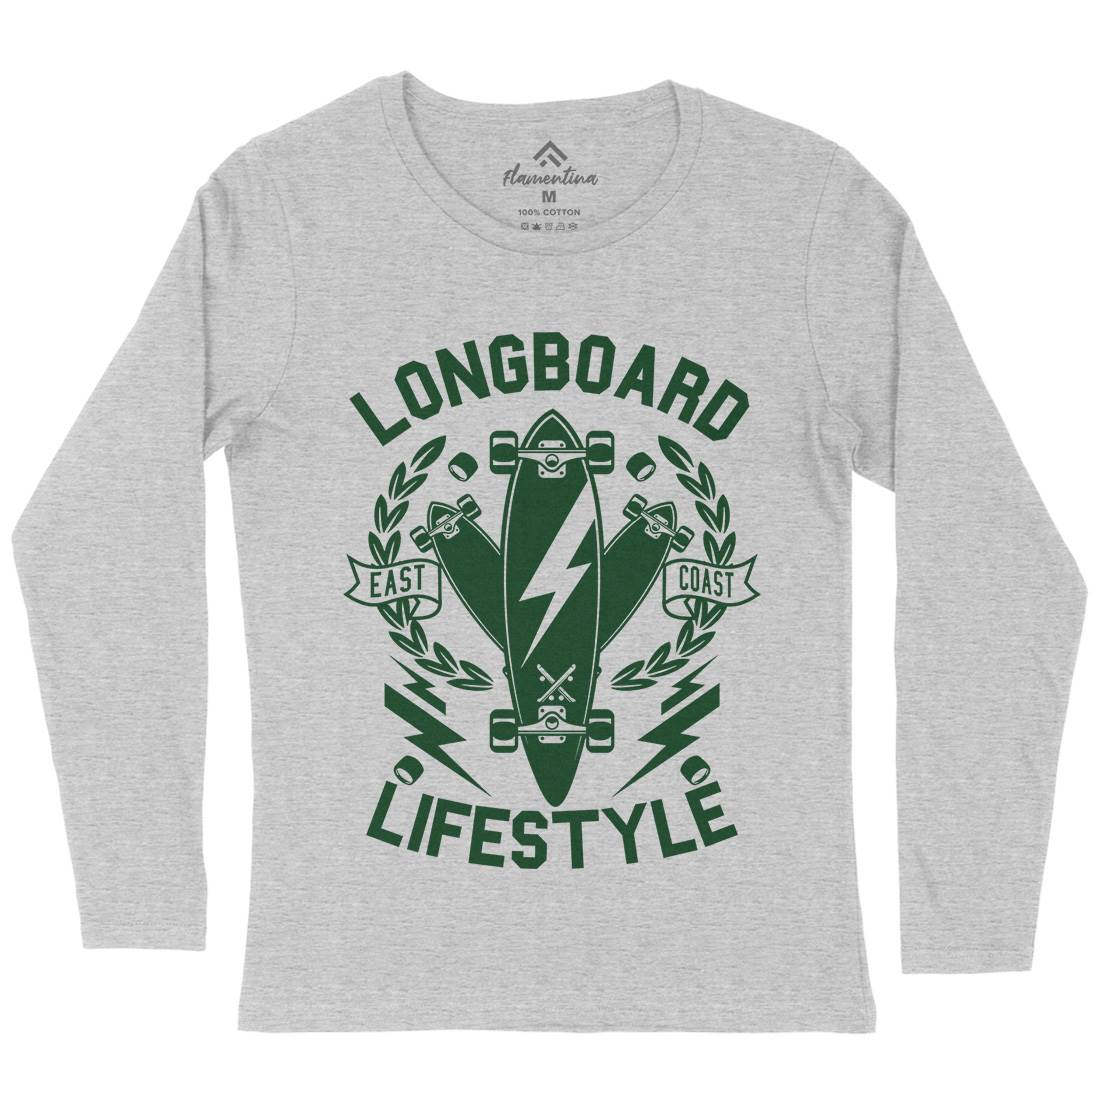 Longboard Lifestyle Womens Long Sleeve T-Shirt Skate A251